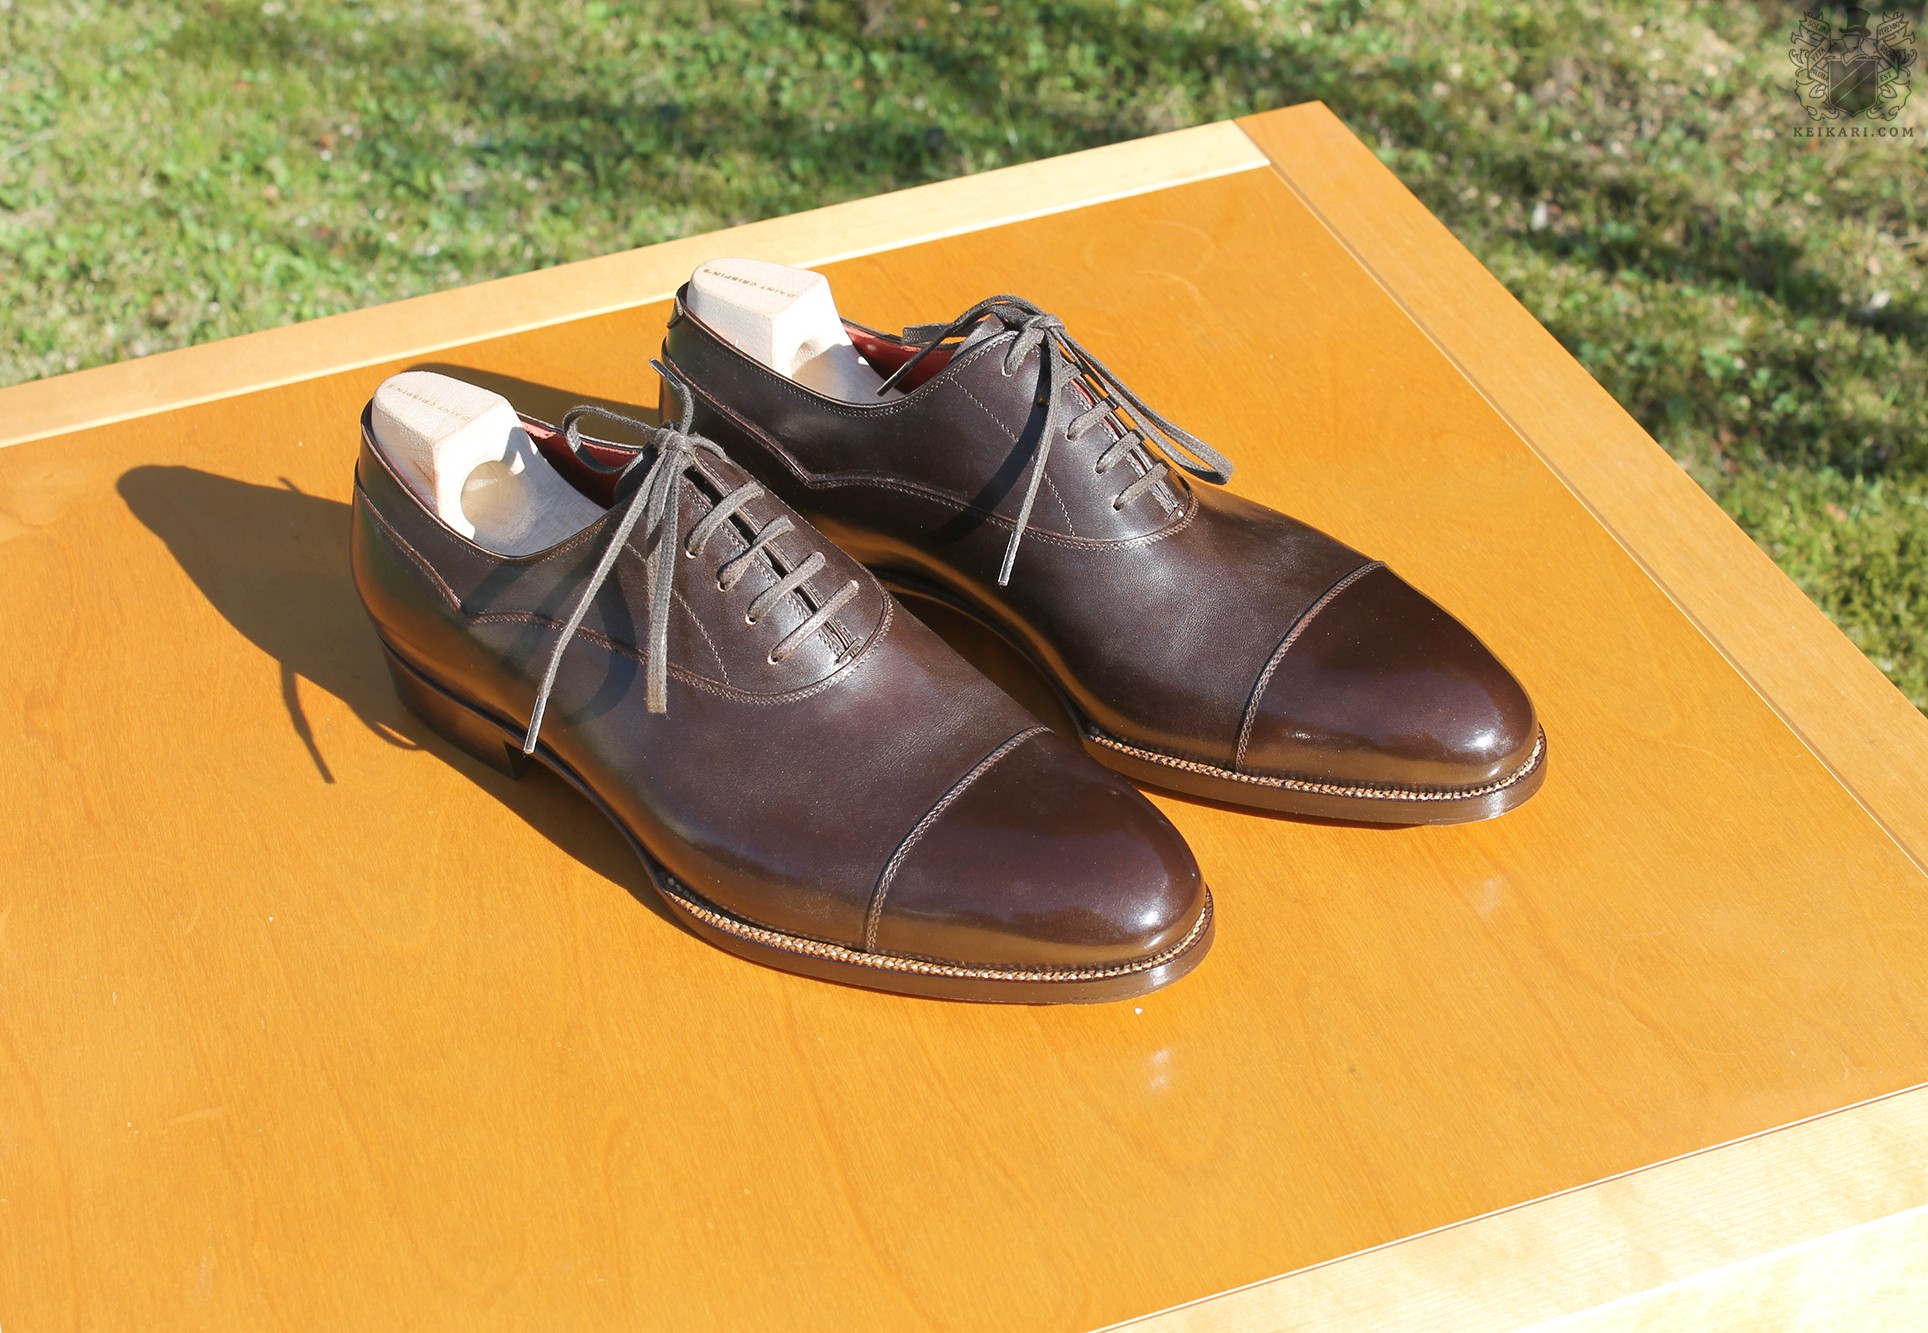 Anatomy_of_Saint_Crispins_shoes_at_Keikari_dot_com07.jpg